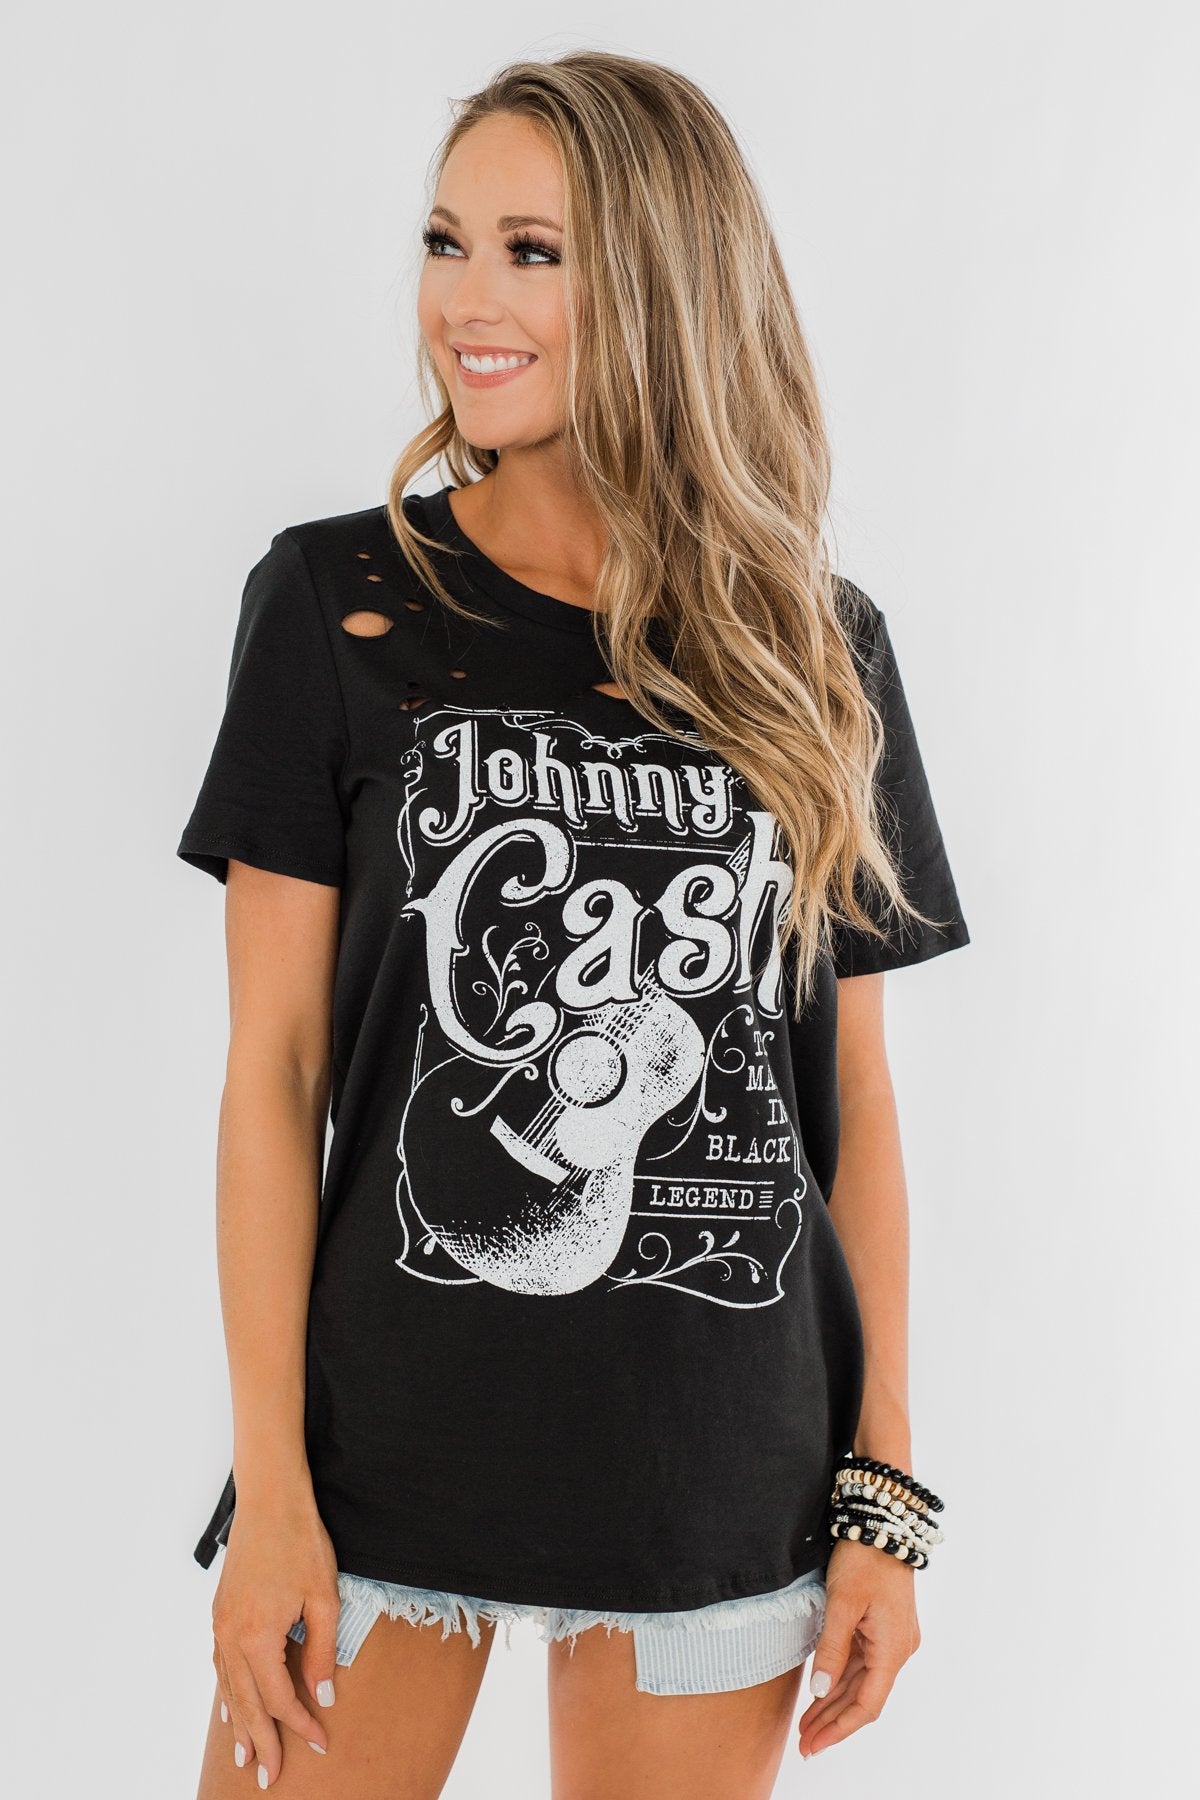 "Johnny Cash" Distressed Graphic Top- Black